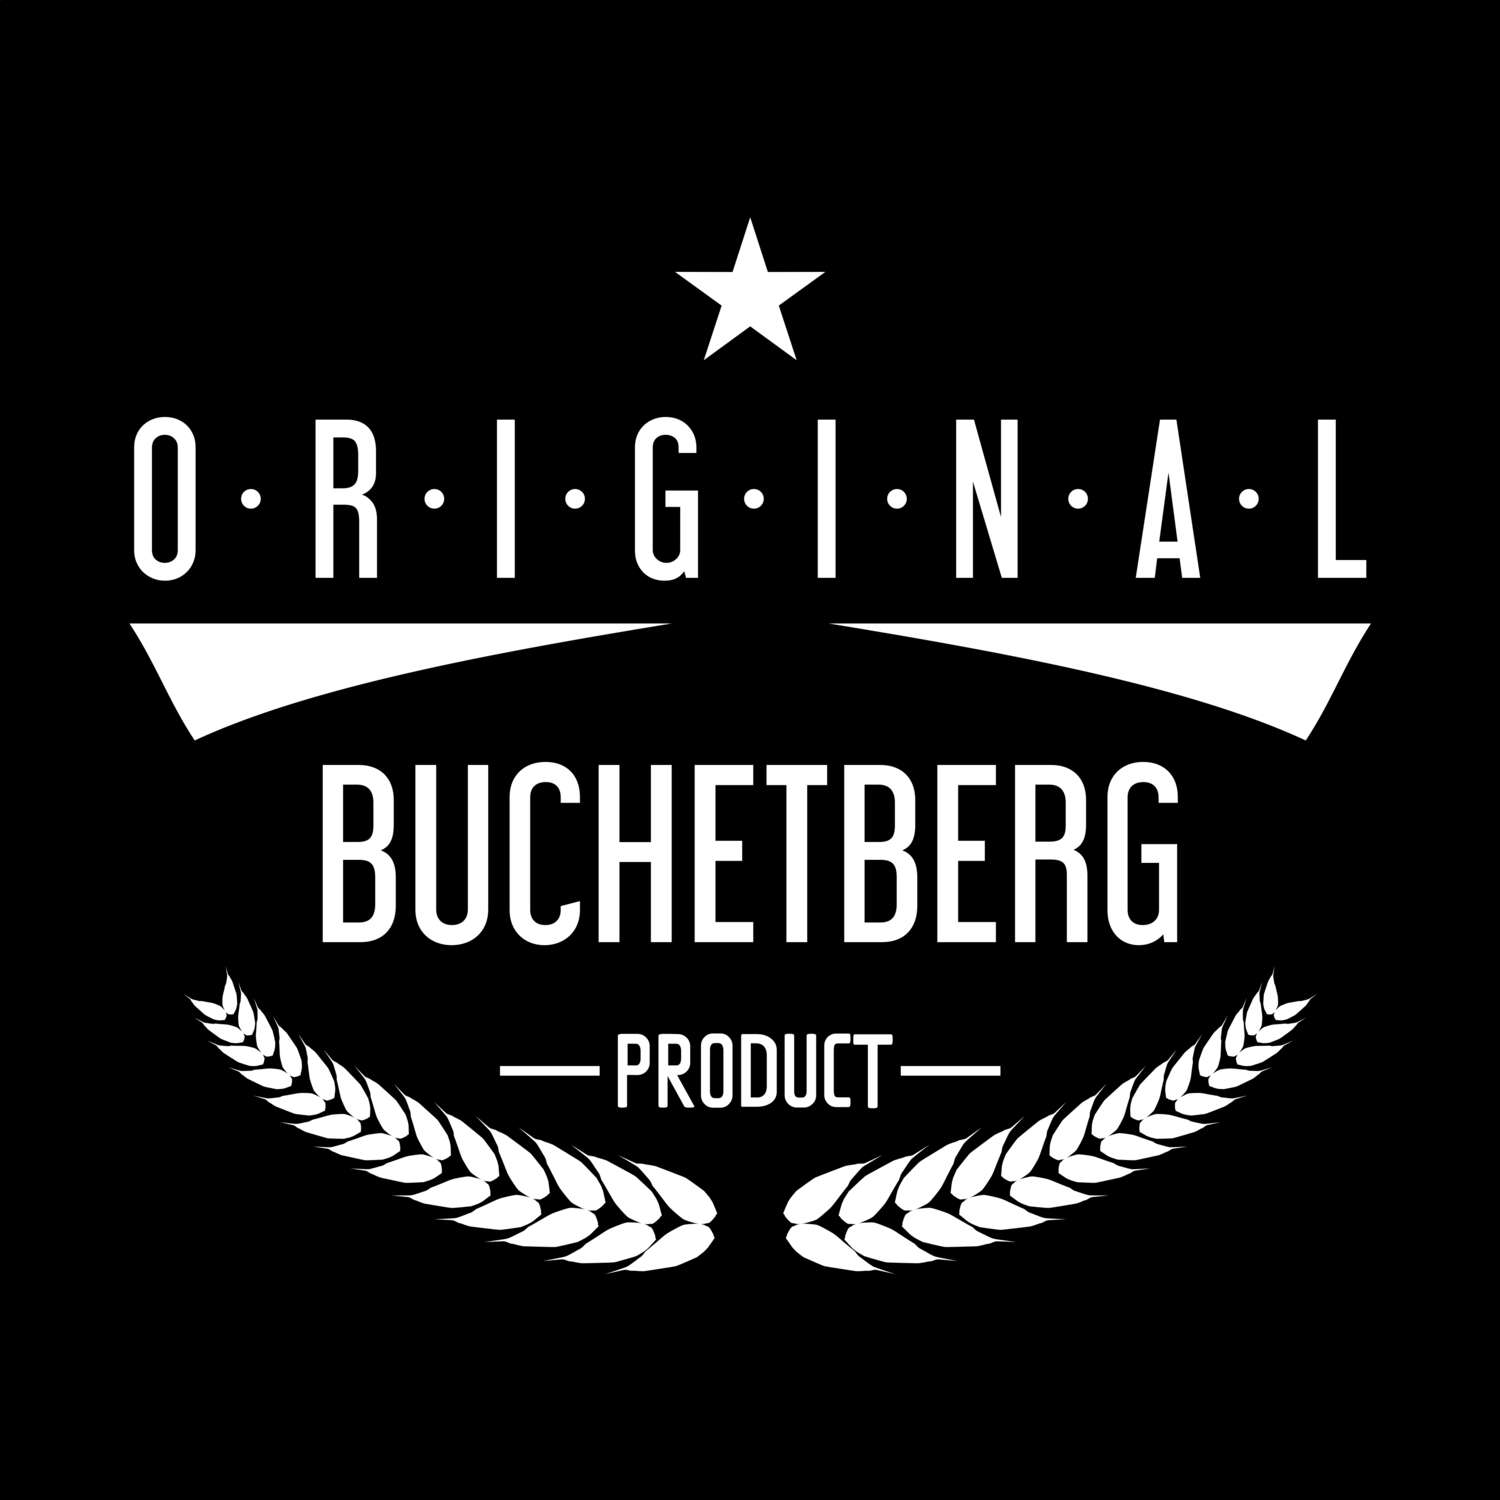 Buchetberg T-Shirt »Original Product«